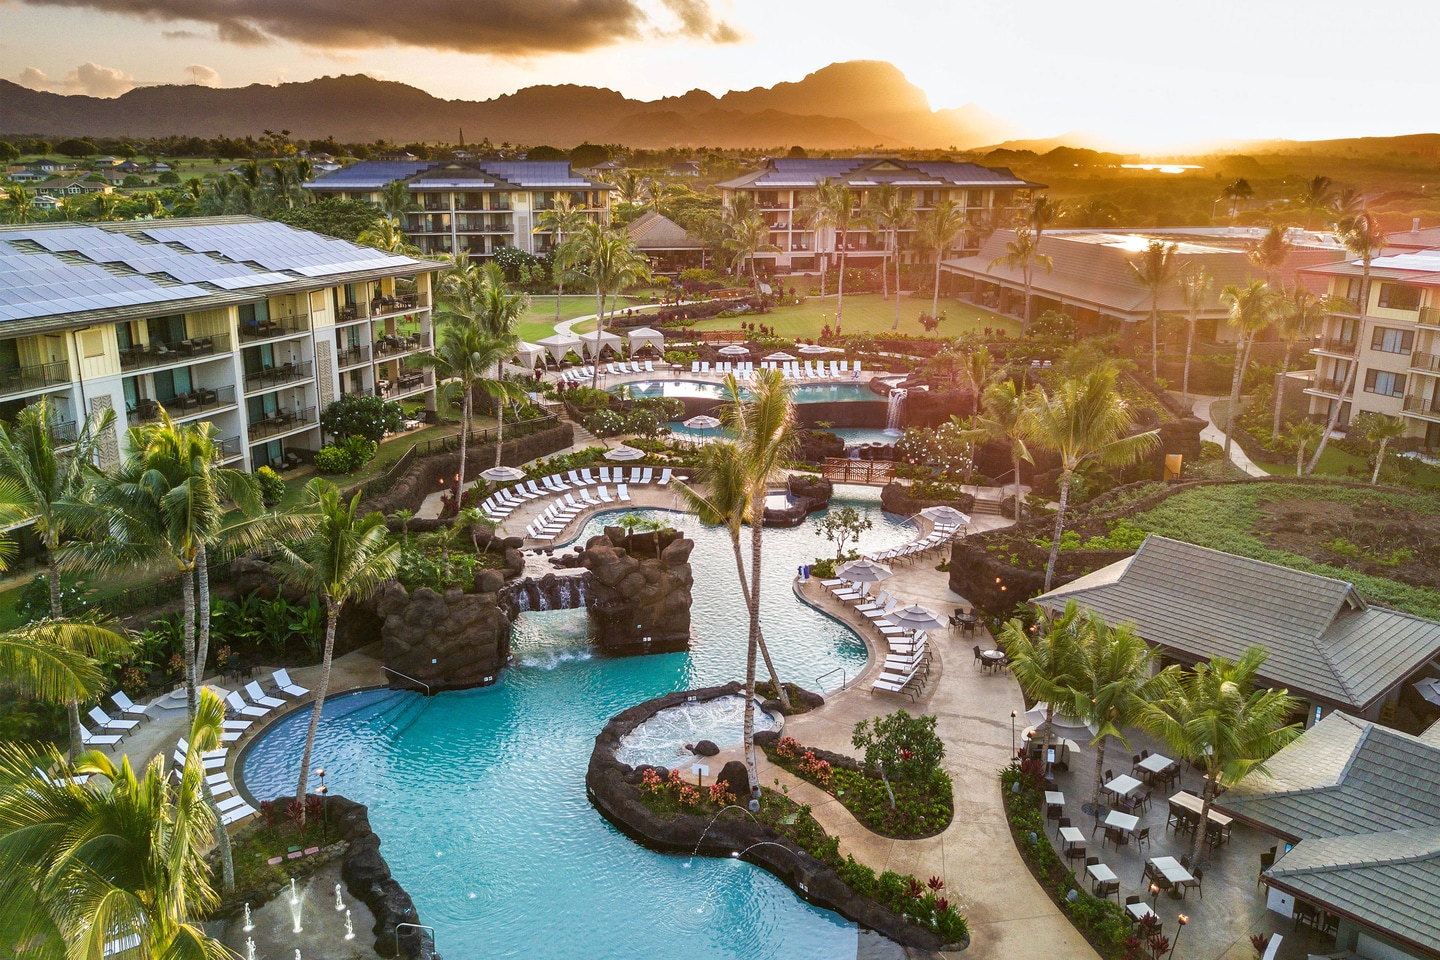 Best Marriott Beach Hotels & Resorts in Hawaii For Your Marriott Free Night Certificate